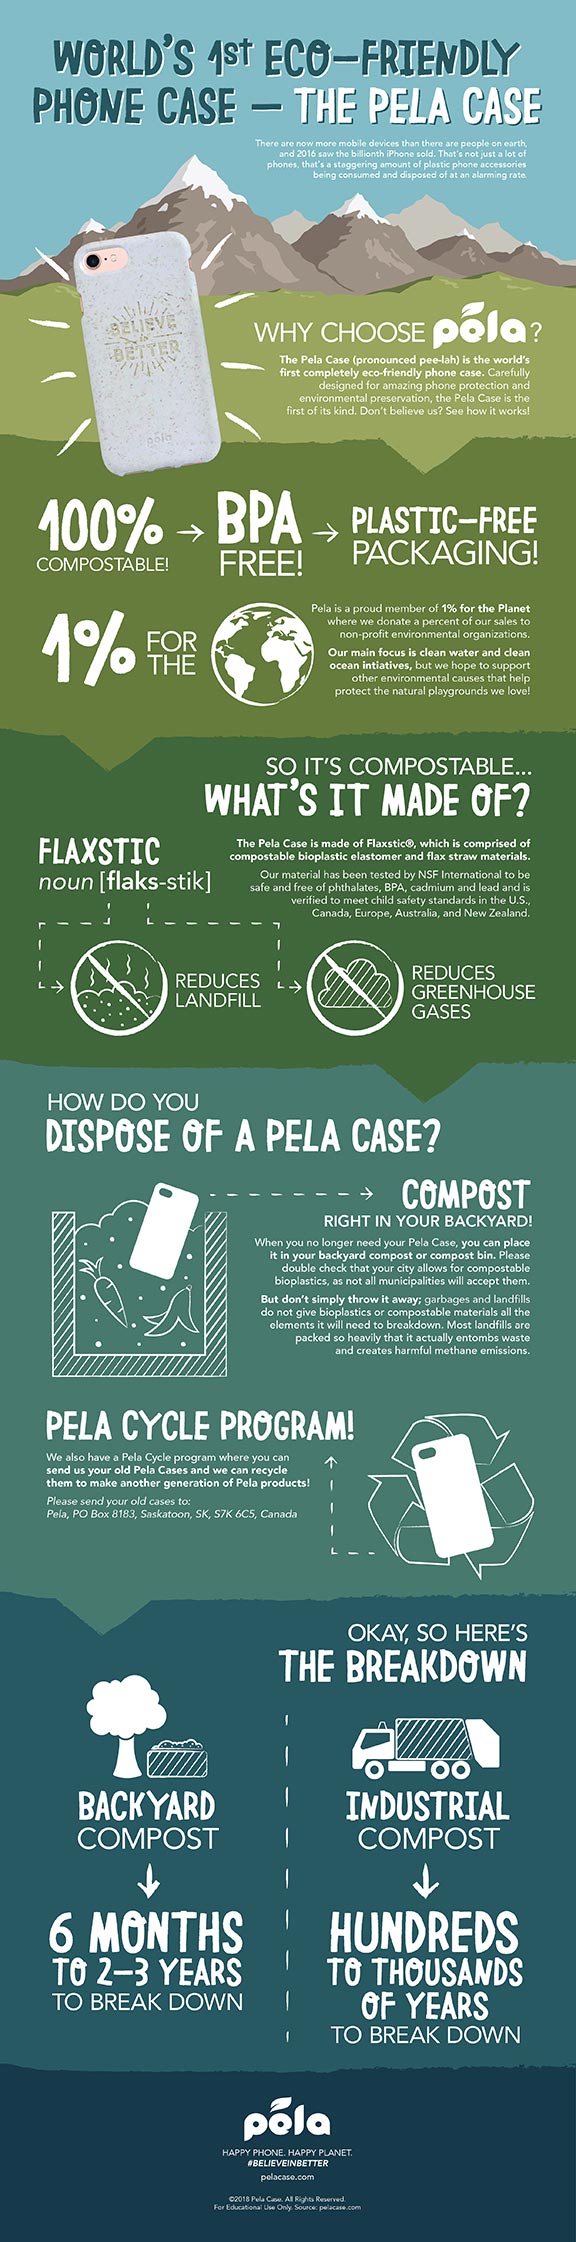 Pela Case Infographic